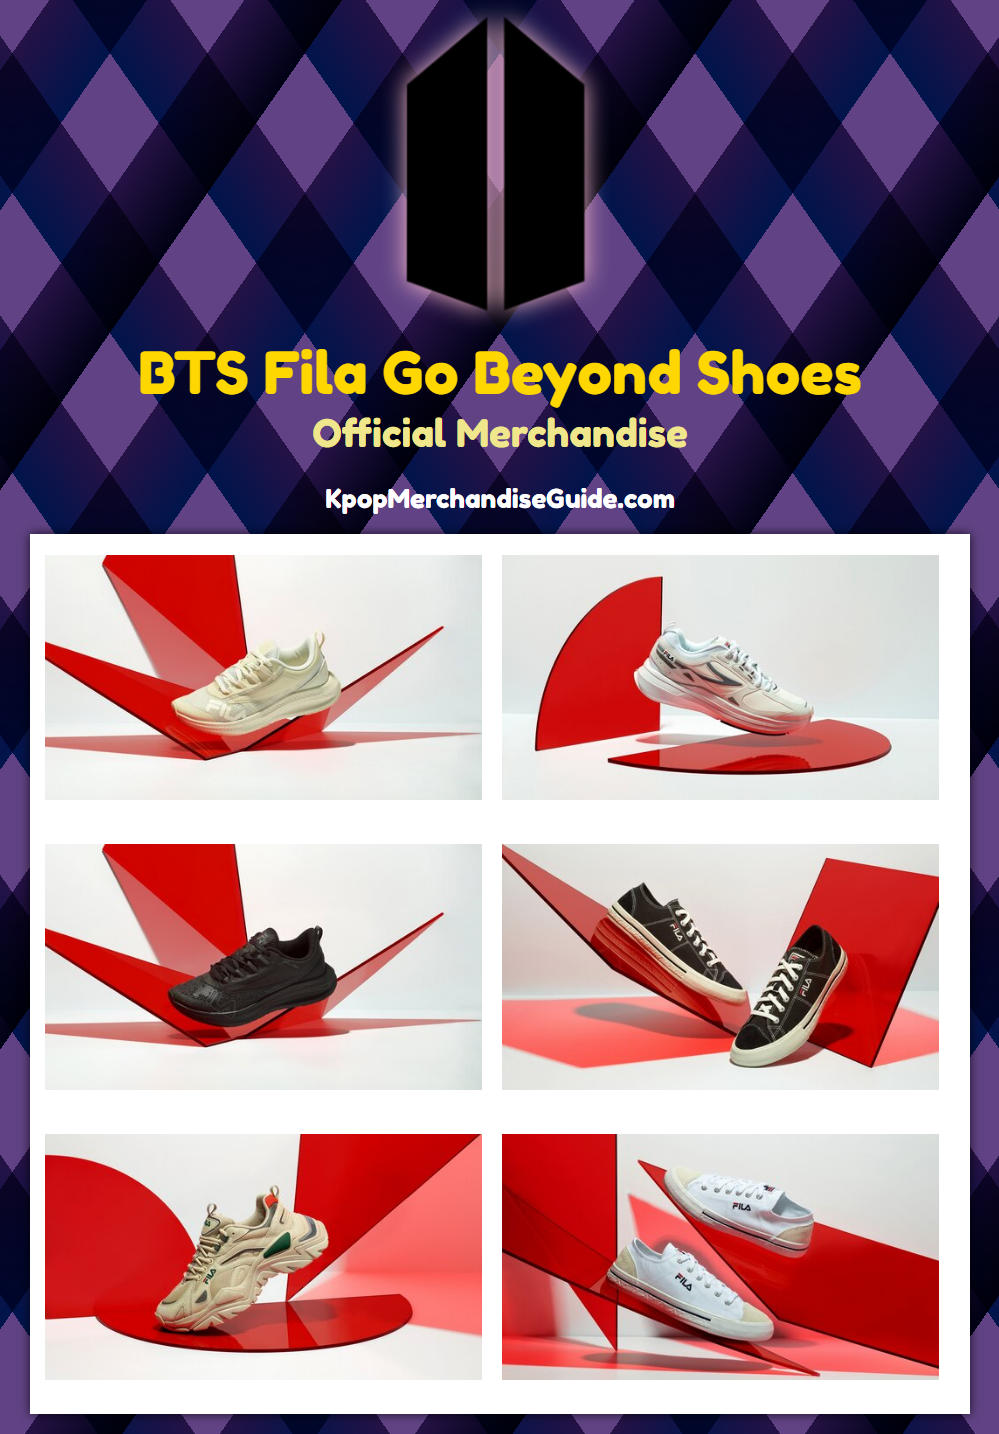 BTS Fila Go Beyond Shoes